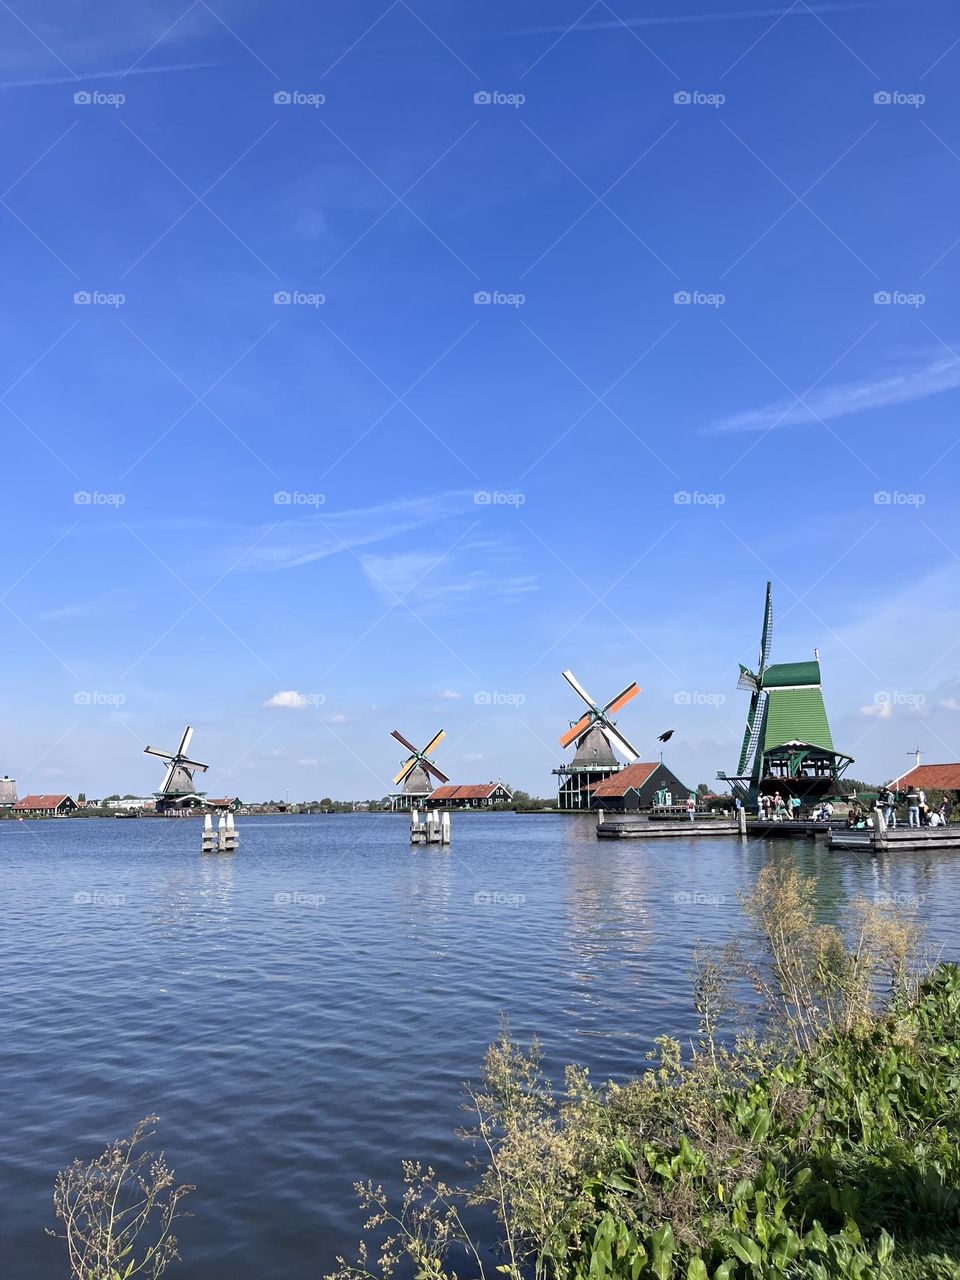 Colorful Dutch windmills on a lake